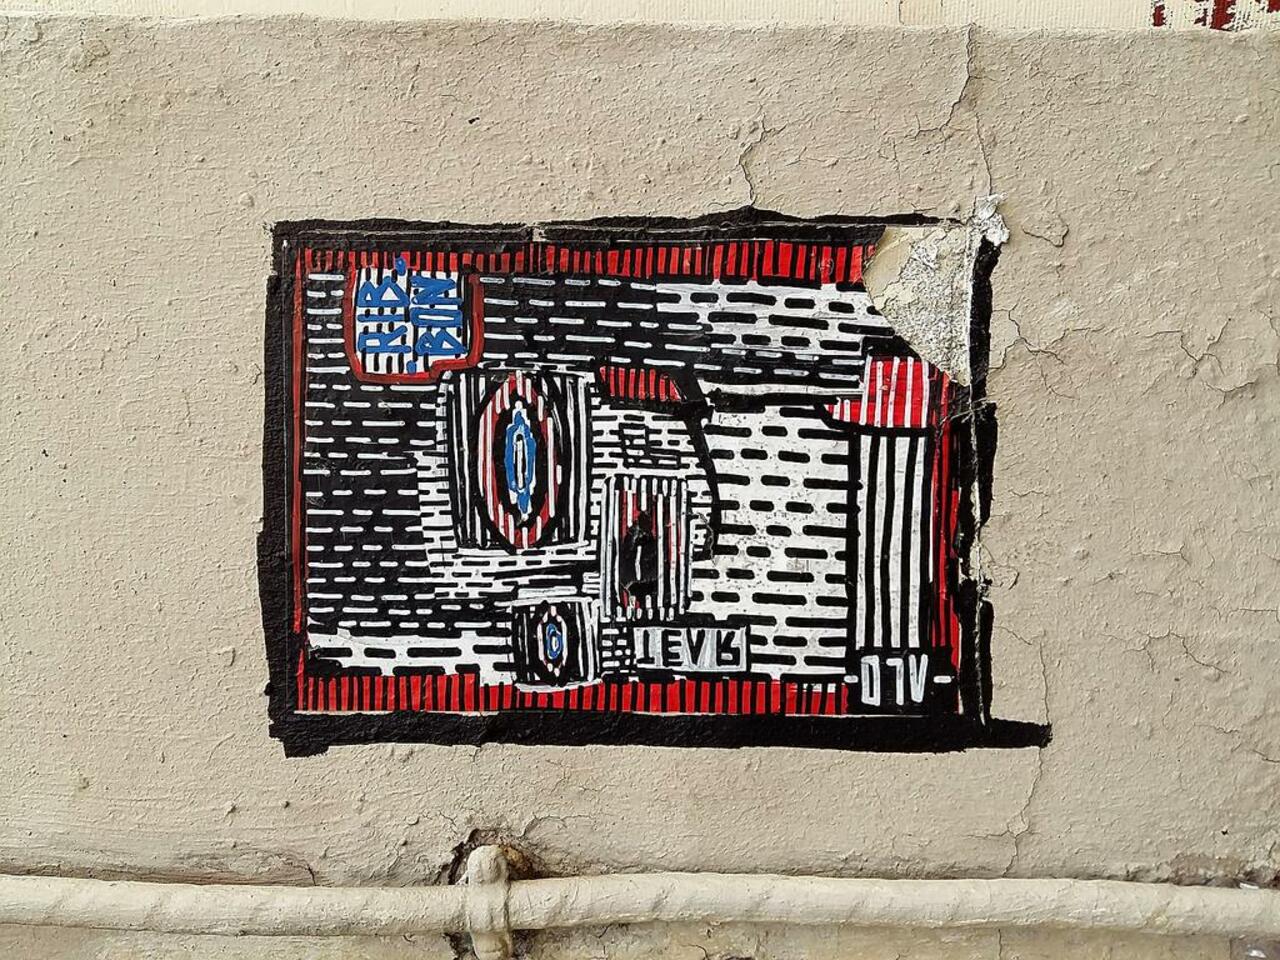 Street Art by alo_art in #Paris http://www.urbacolors.com #art #mural #graffiti #streetart http://t.co/G027u7JSGB